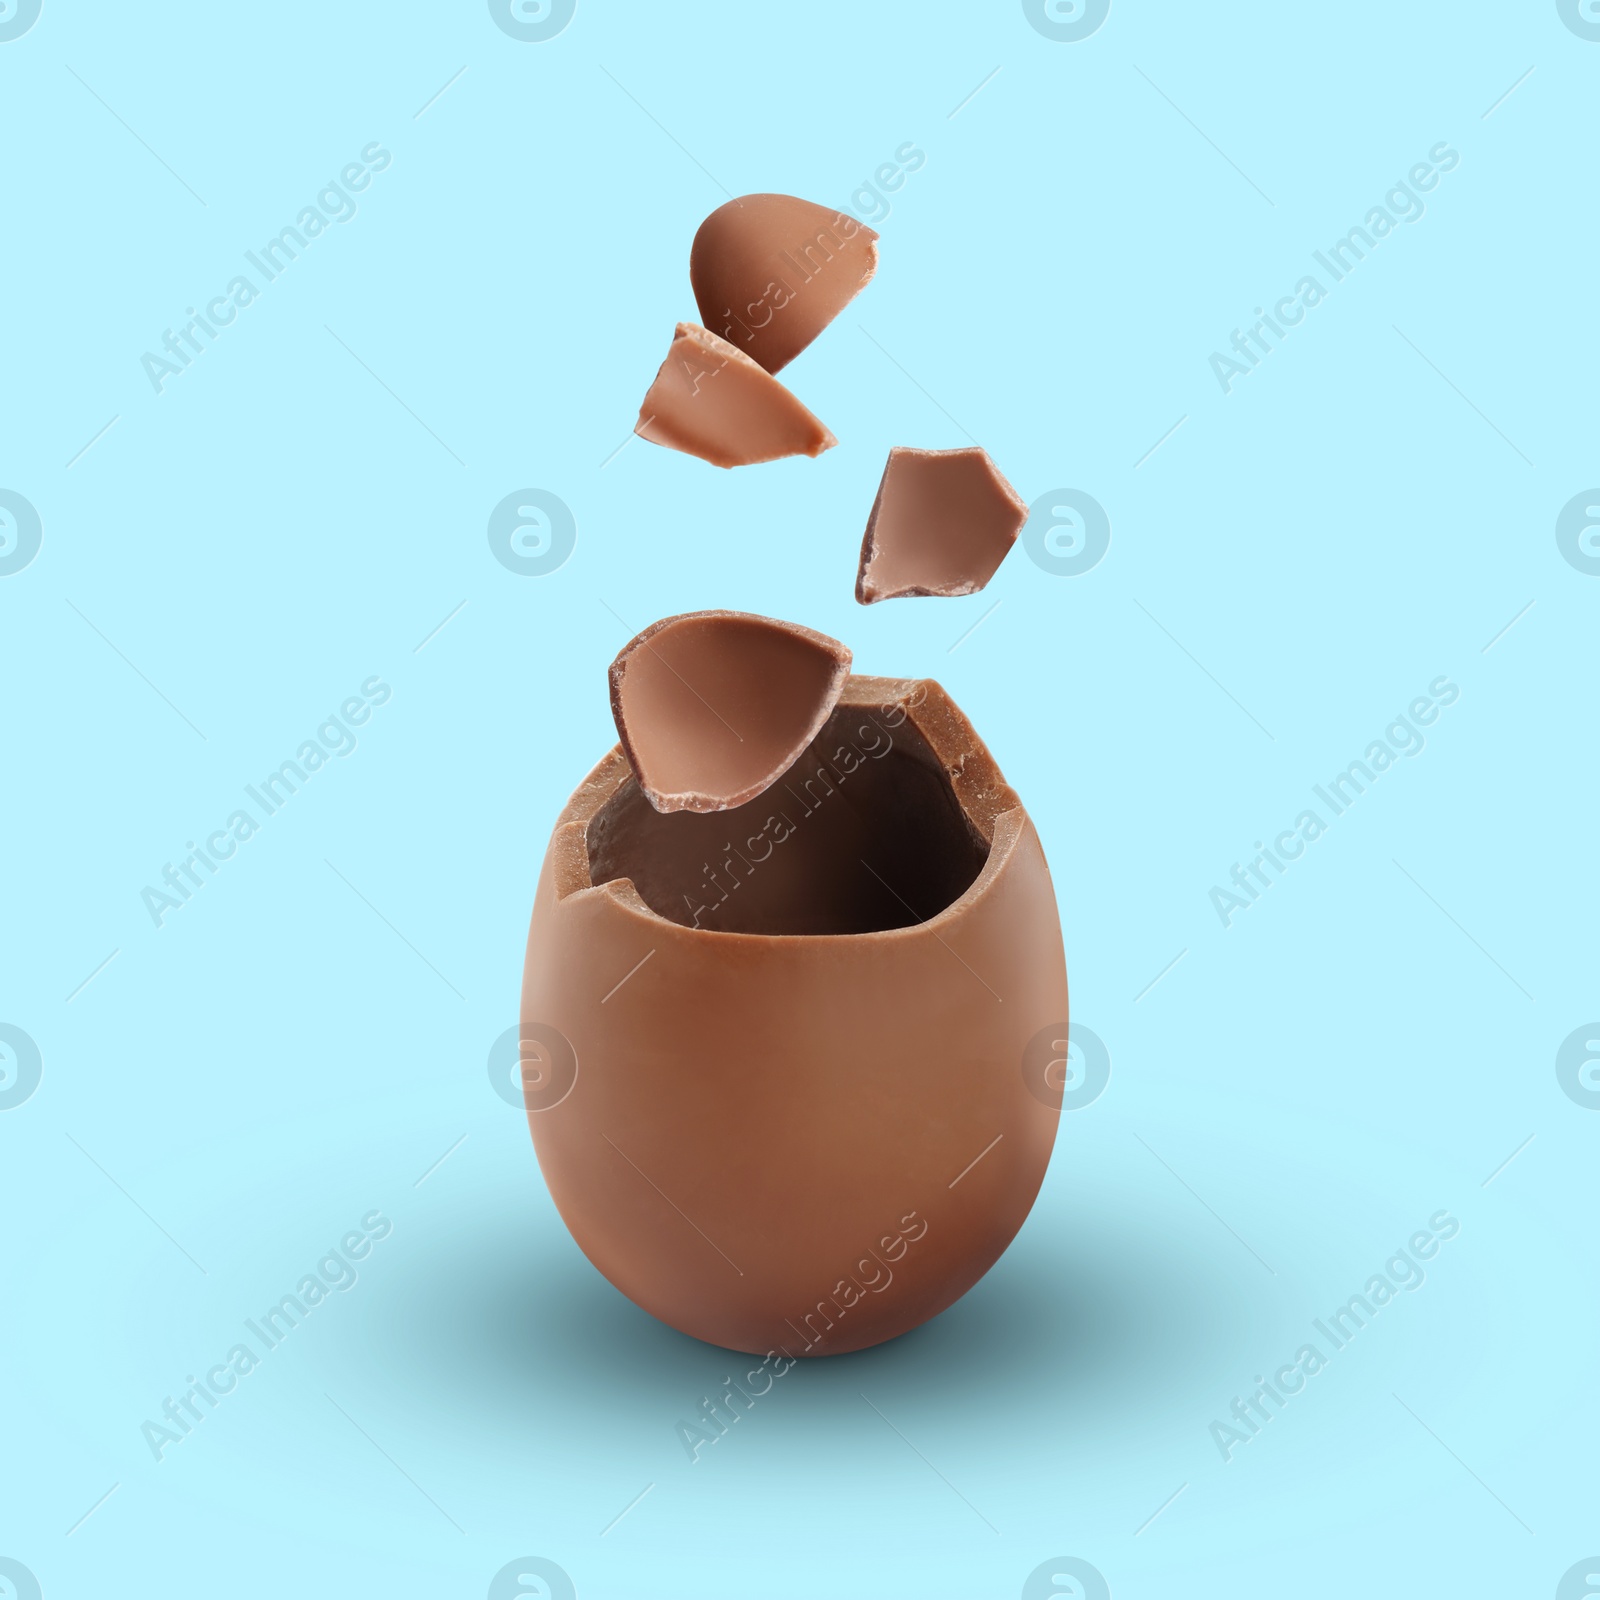 Image of Exploded milk chocolate egg on light blue background